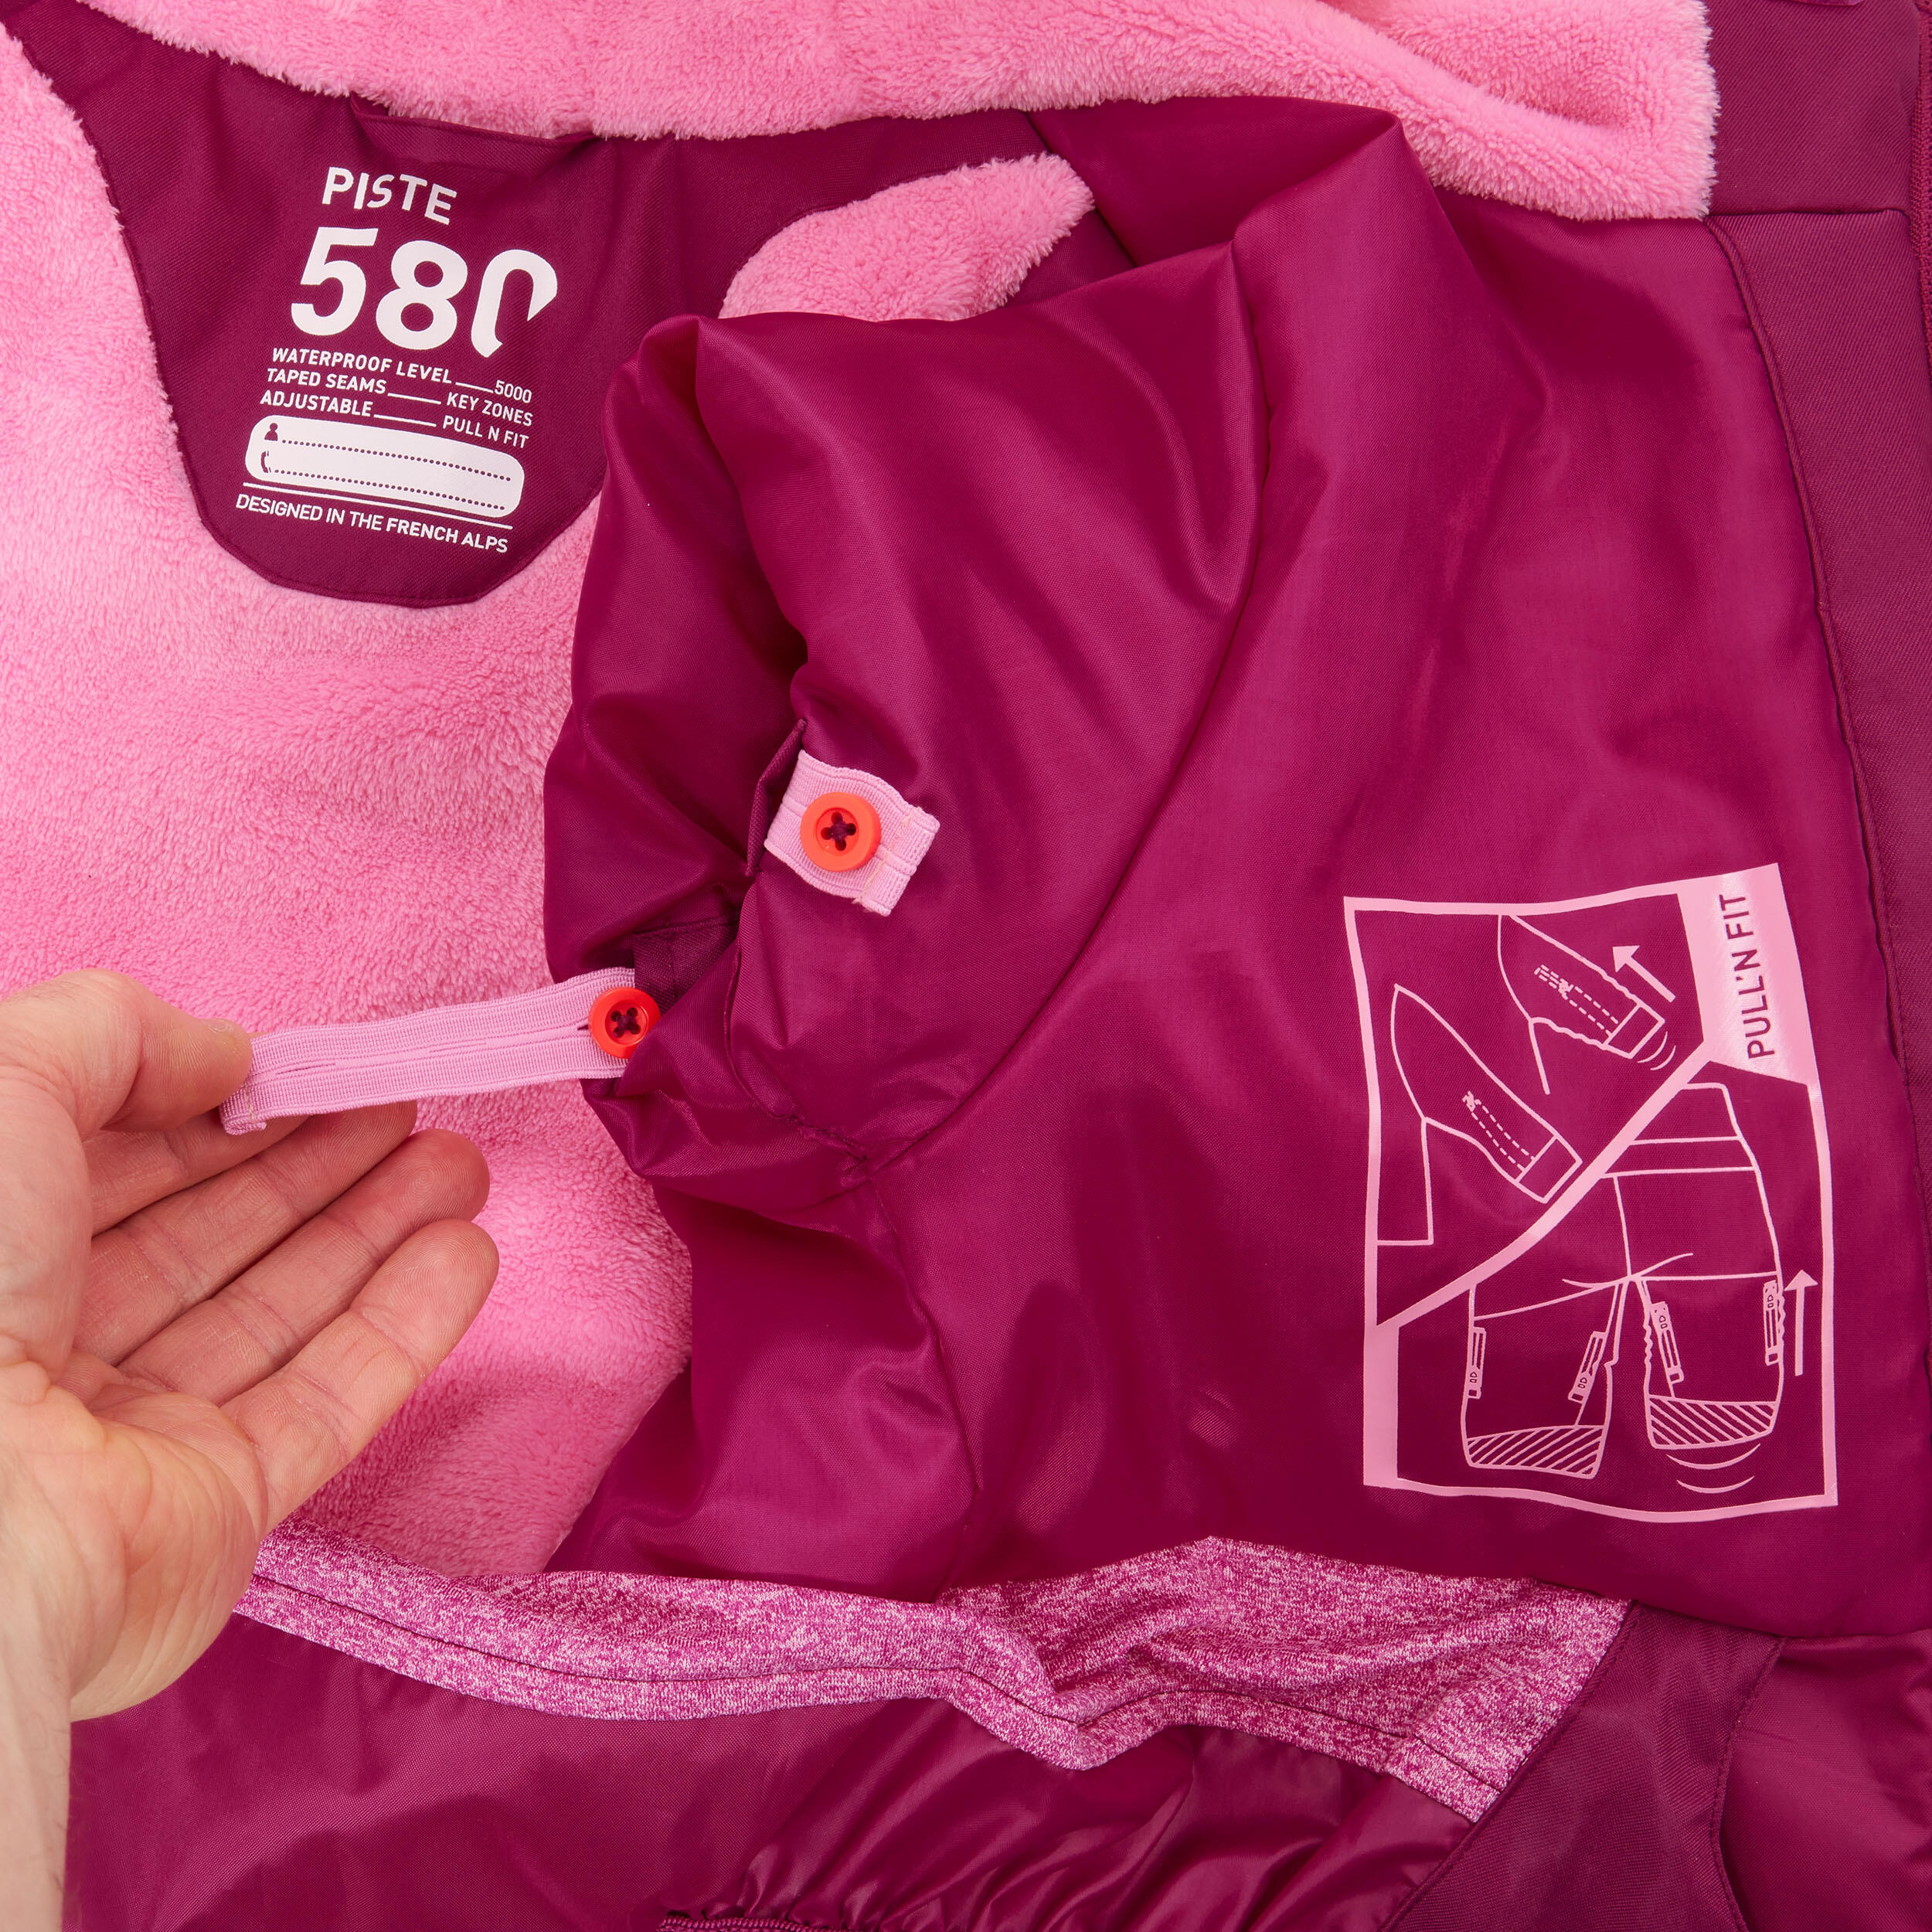 Kids’ Warm and Waterproof Ski Suit 580 - Pink 9/15